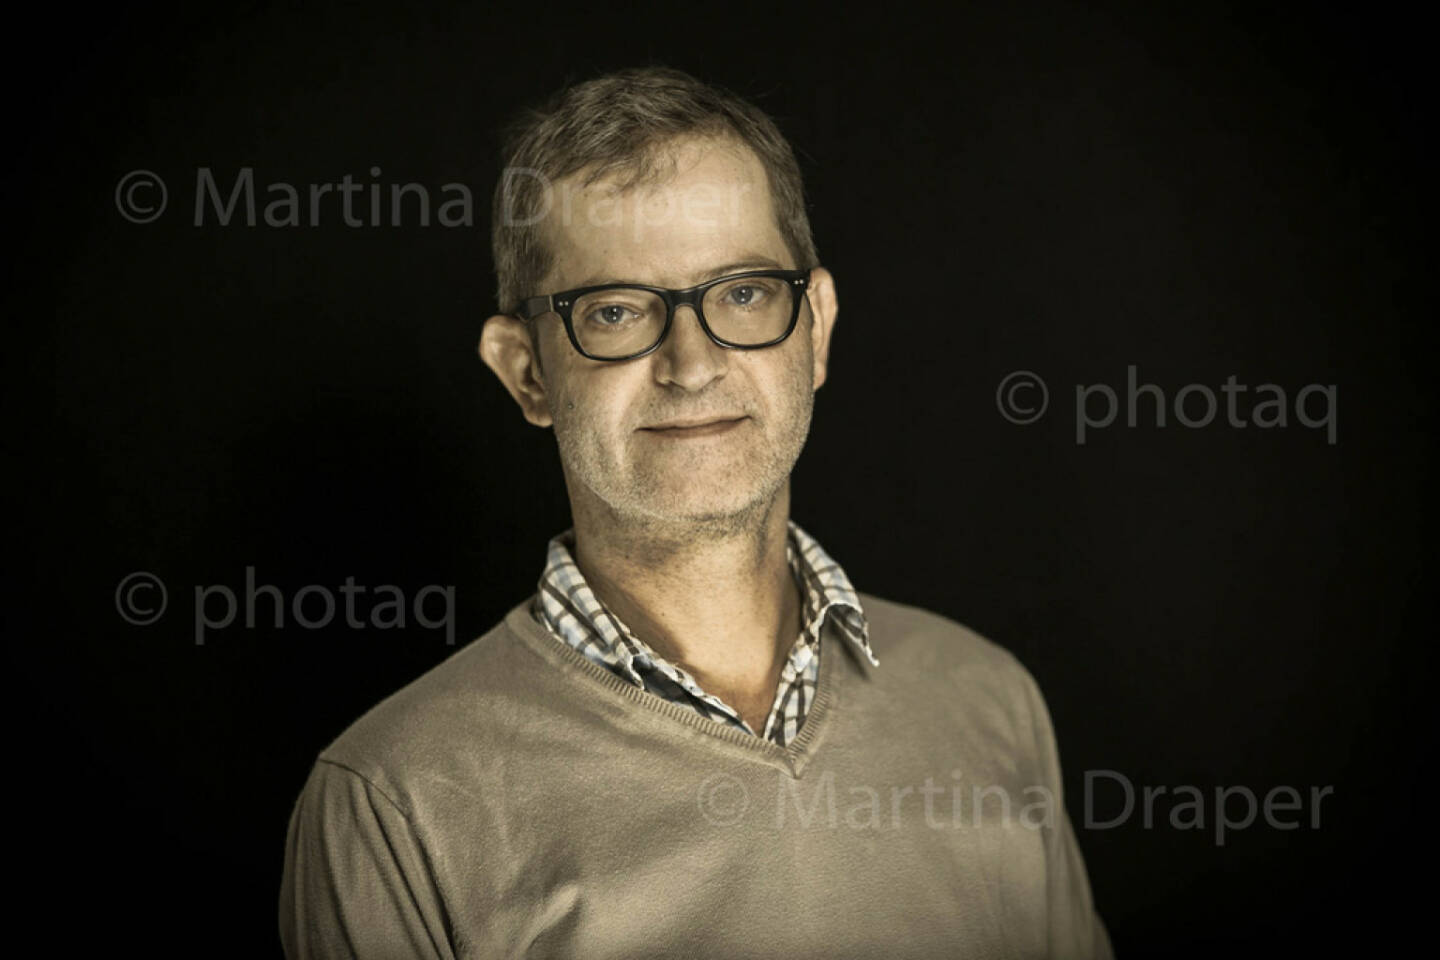 Clemens Haipl (Kabarettist, Moderator) #photaqseries http://photaq.com/series